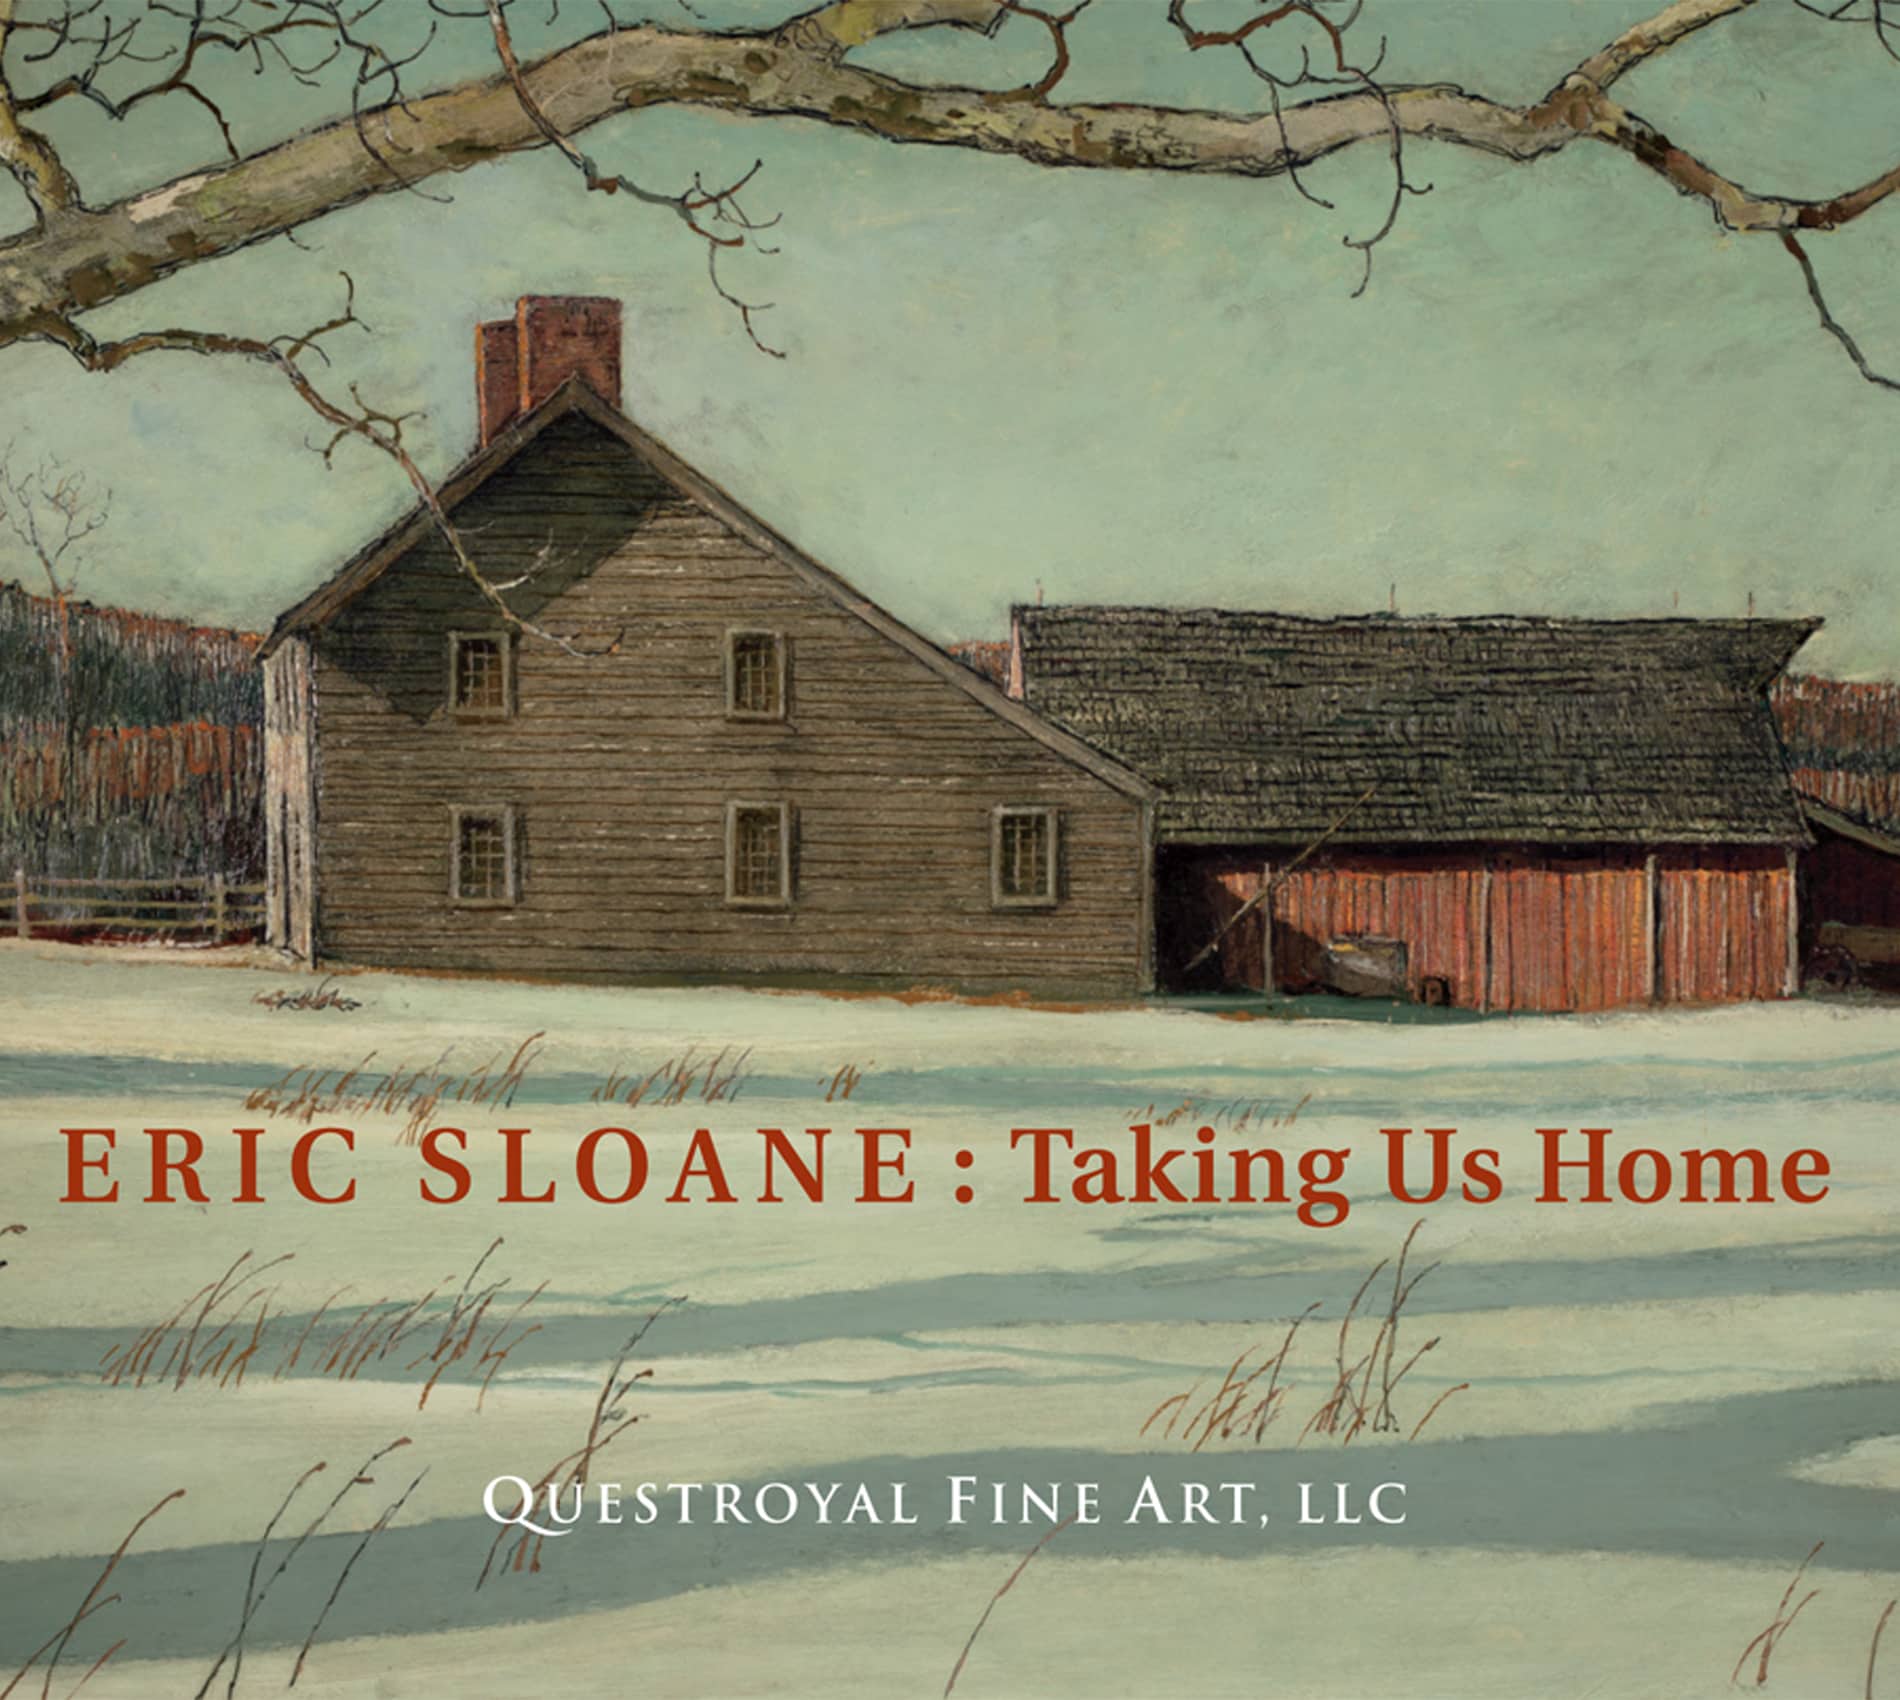 ERIC SLOANE: Taking Us Home